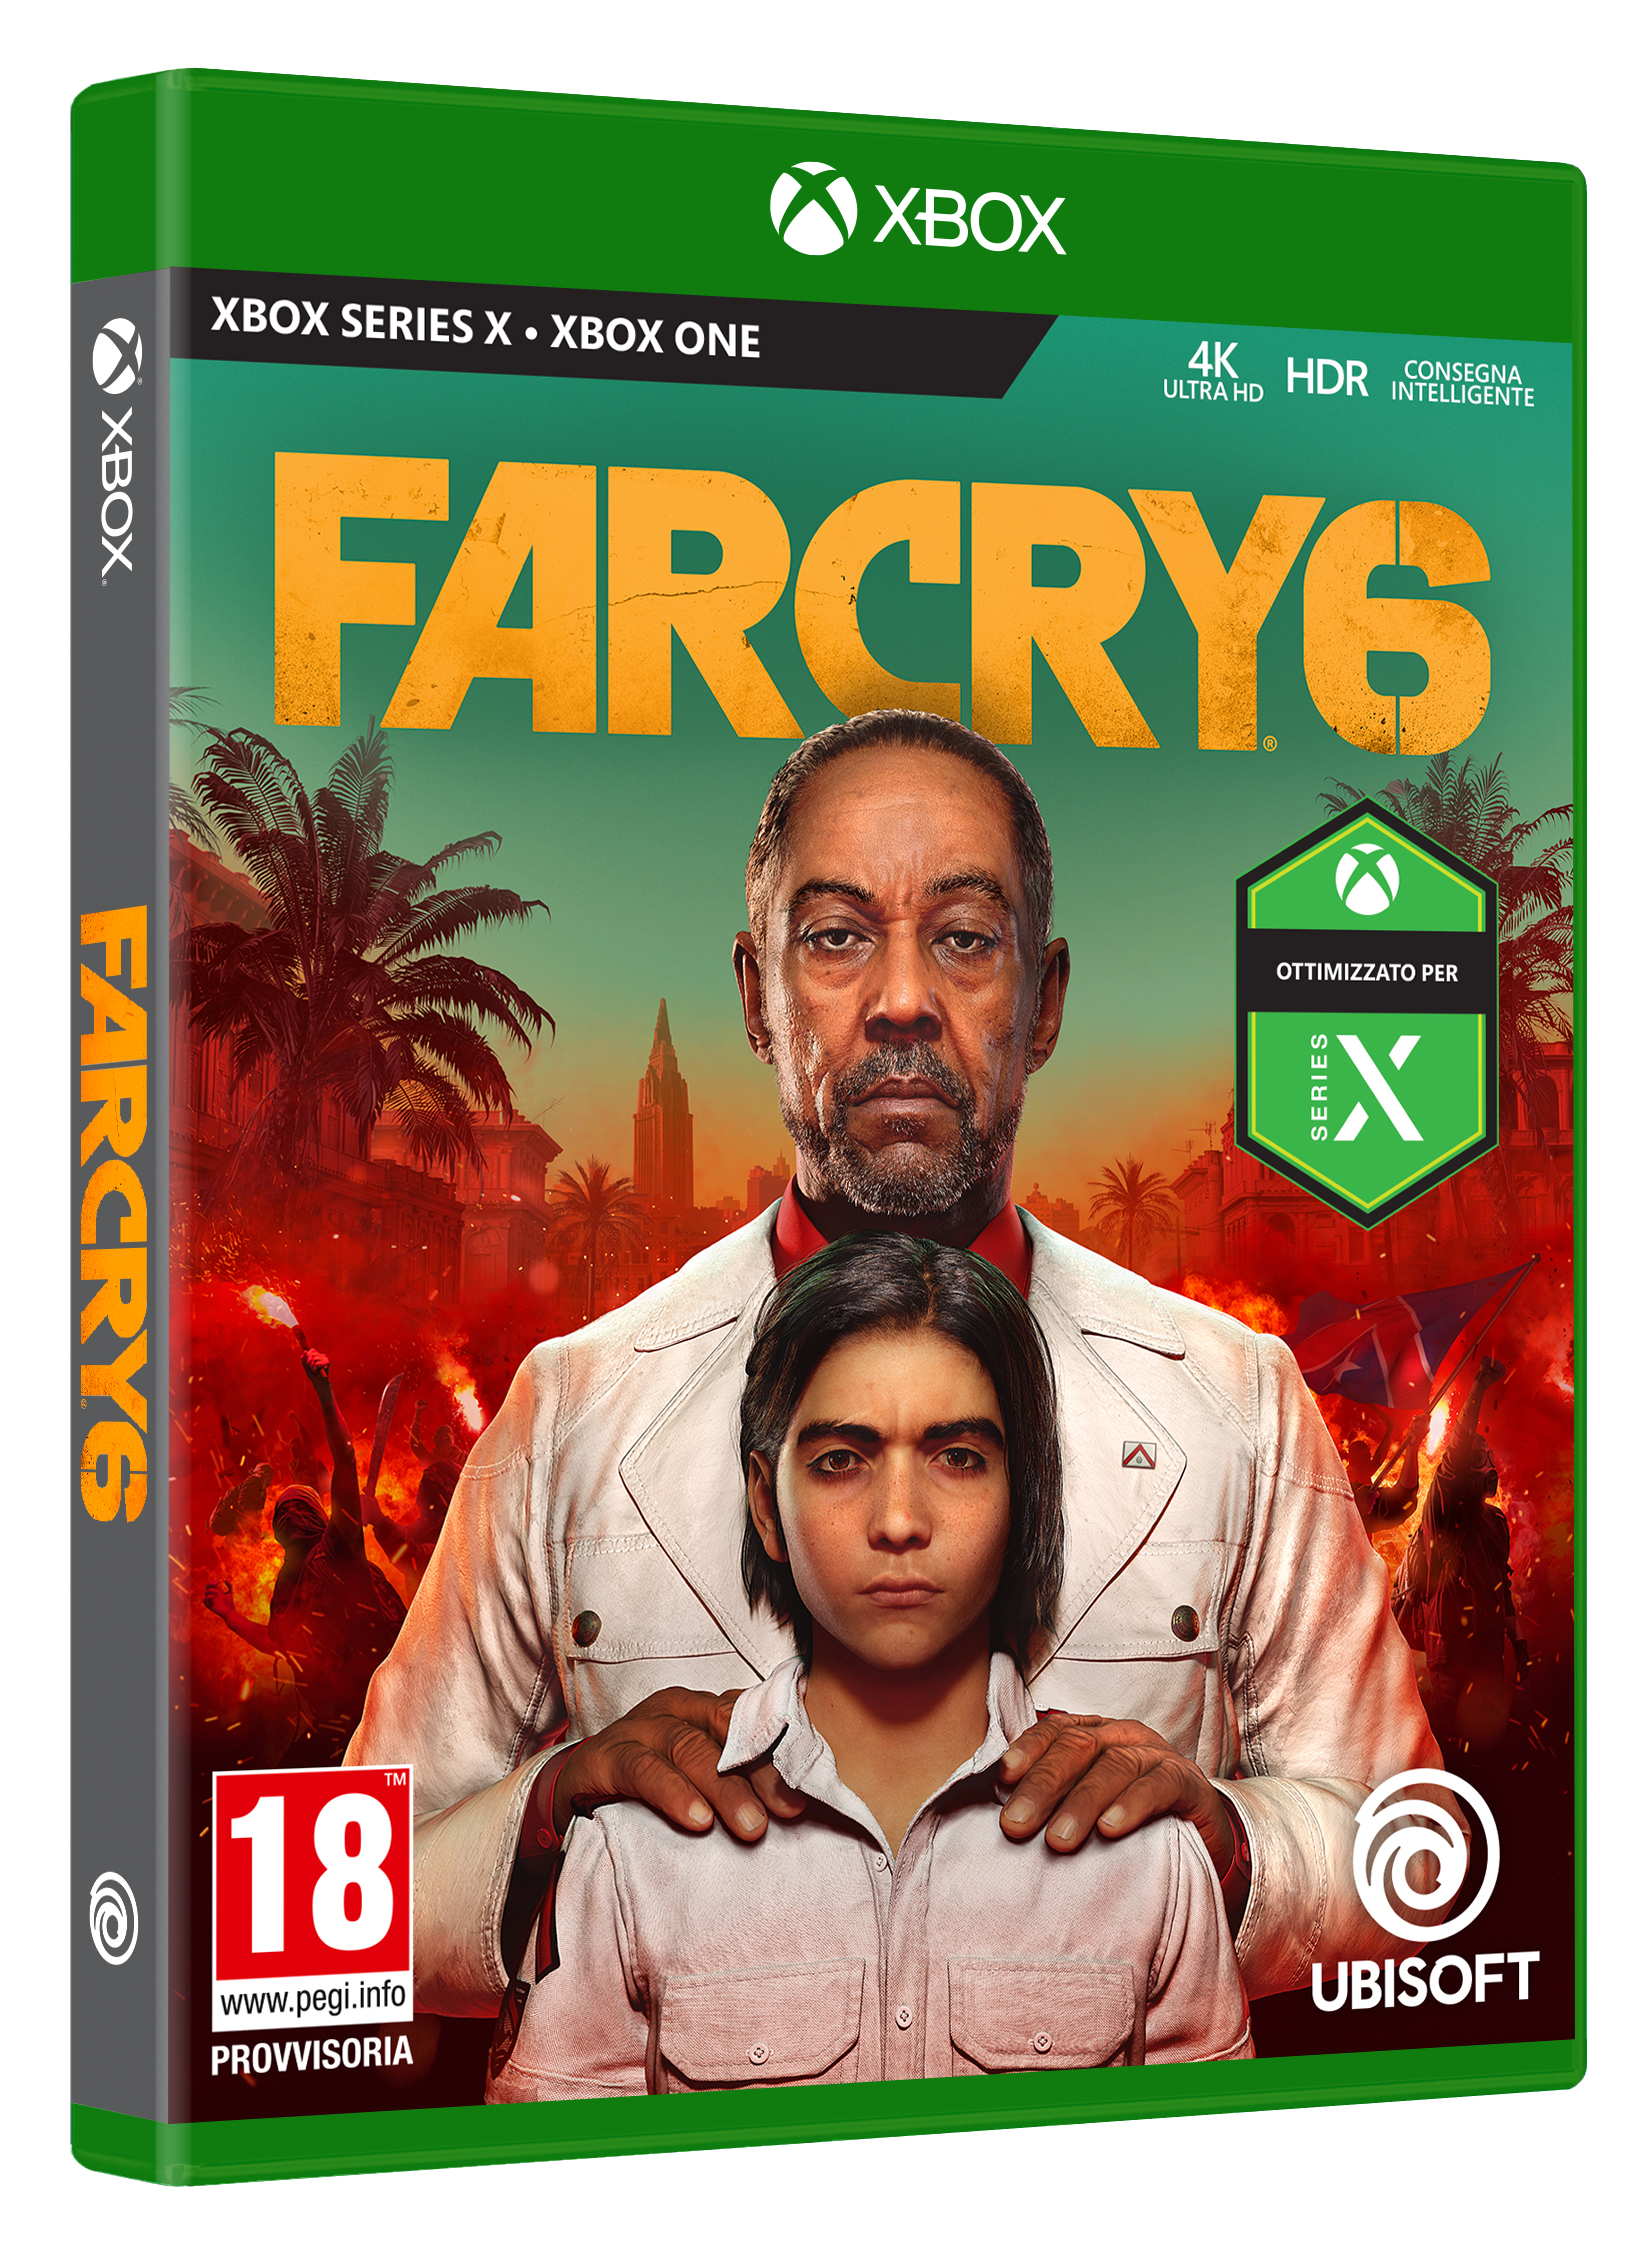 Videogioco Ubisoft Far Cry 6, Xbox System Standard Inglese, ITA [300116816]